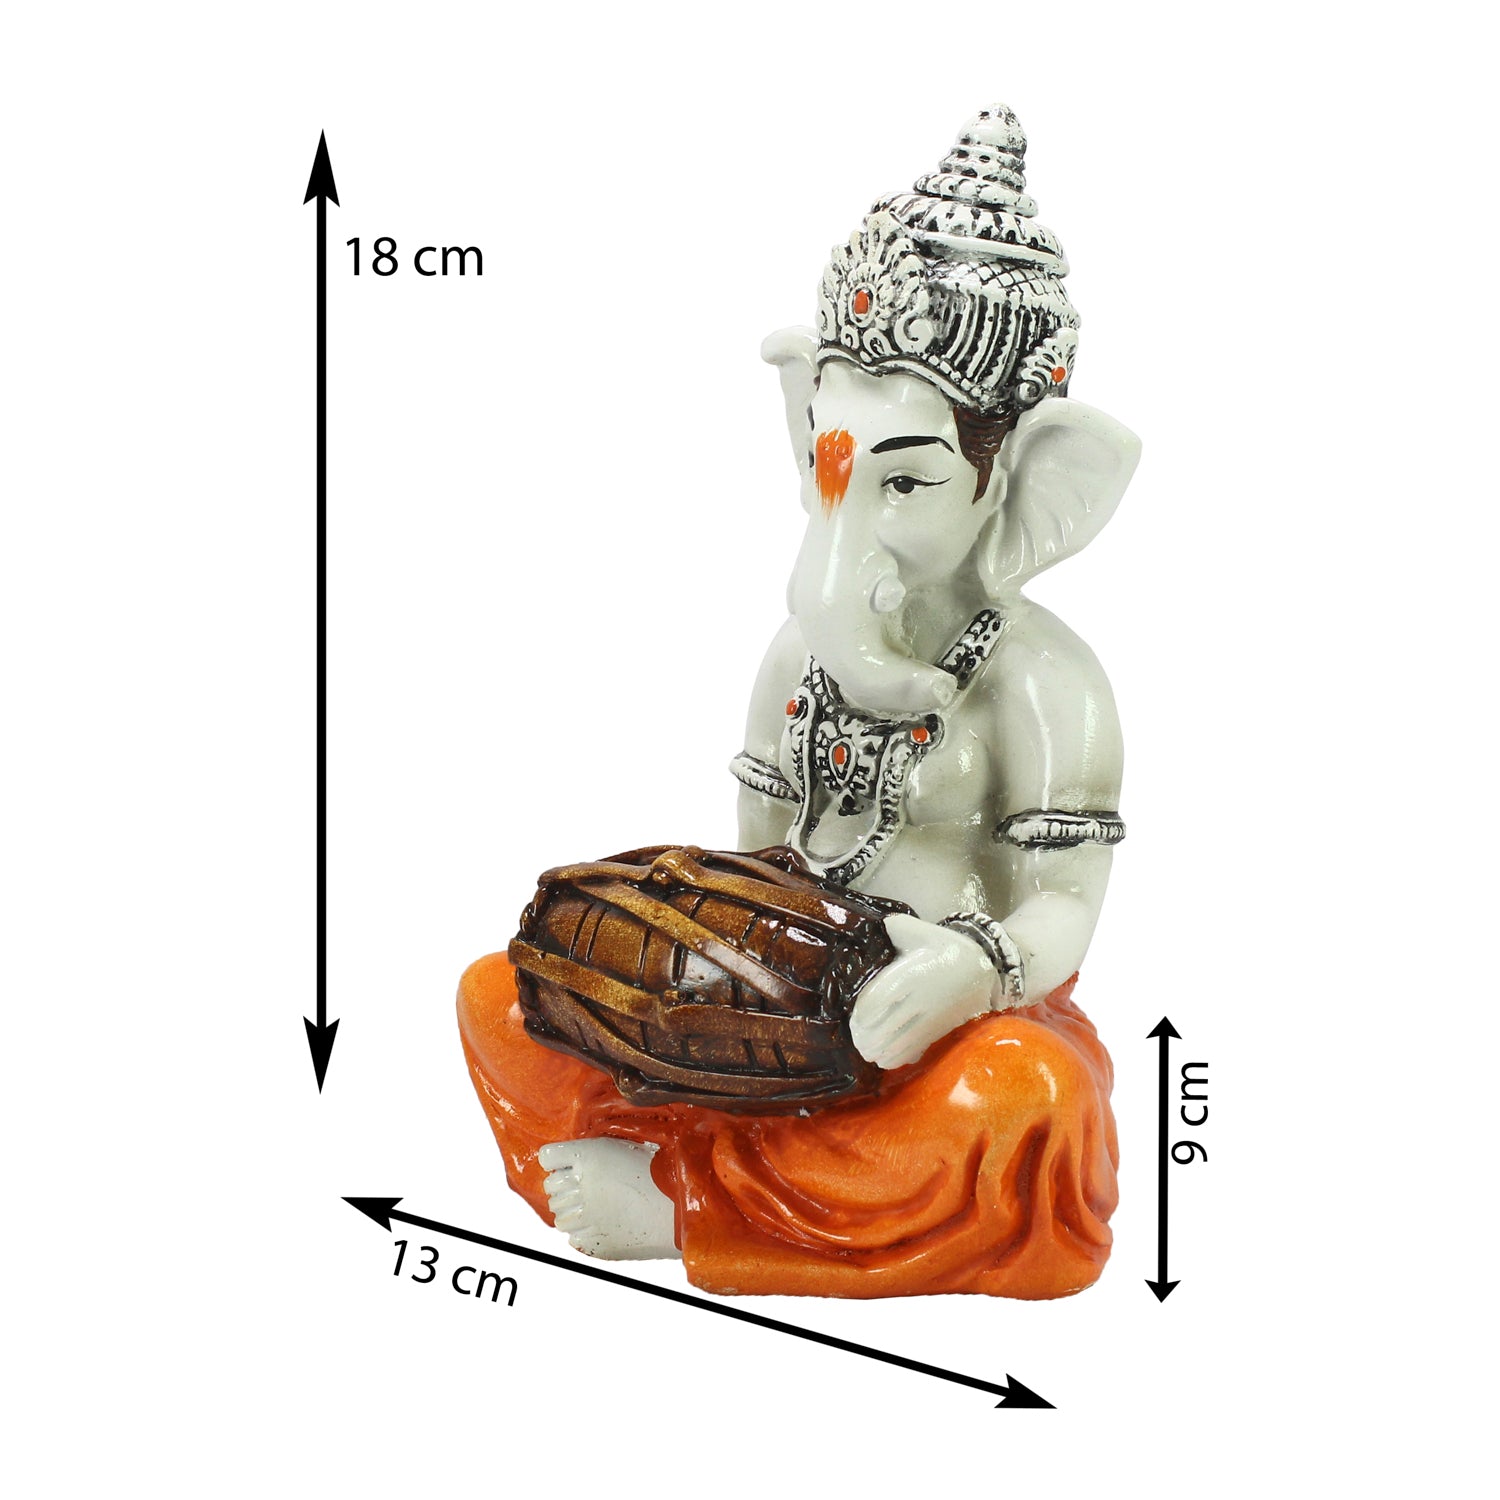 Lord Ganesha Idol Playing Dholak Musical Instrument 2